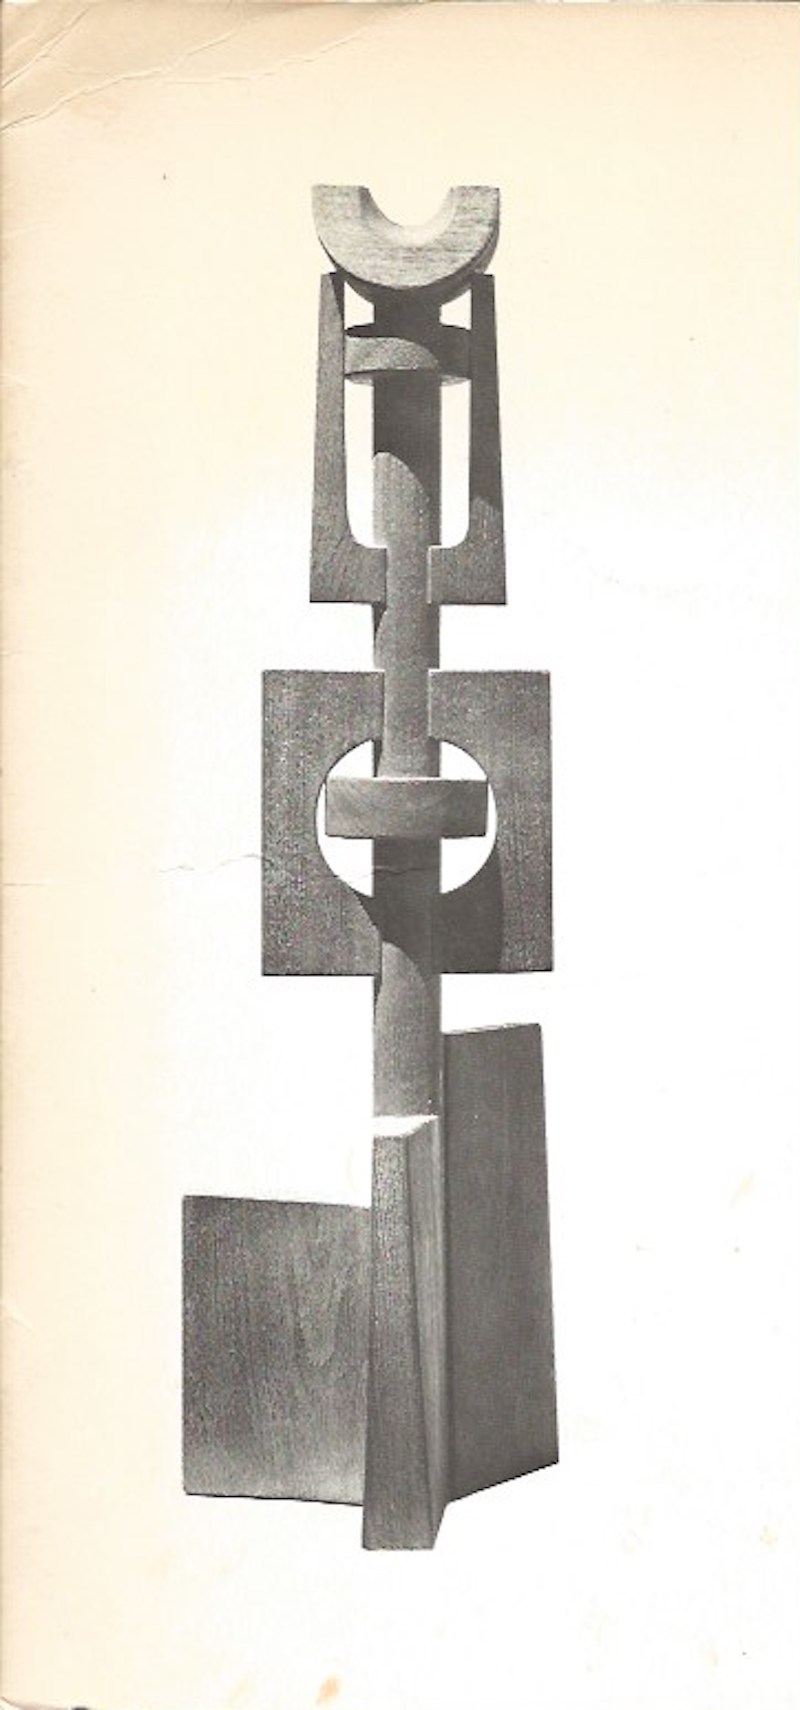 Clifford Last Sculpture 1972-1974 by Bukowski, Charles